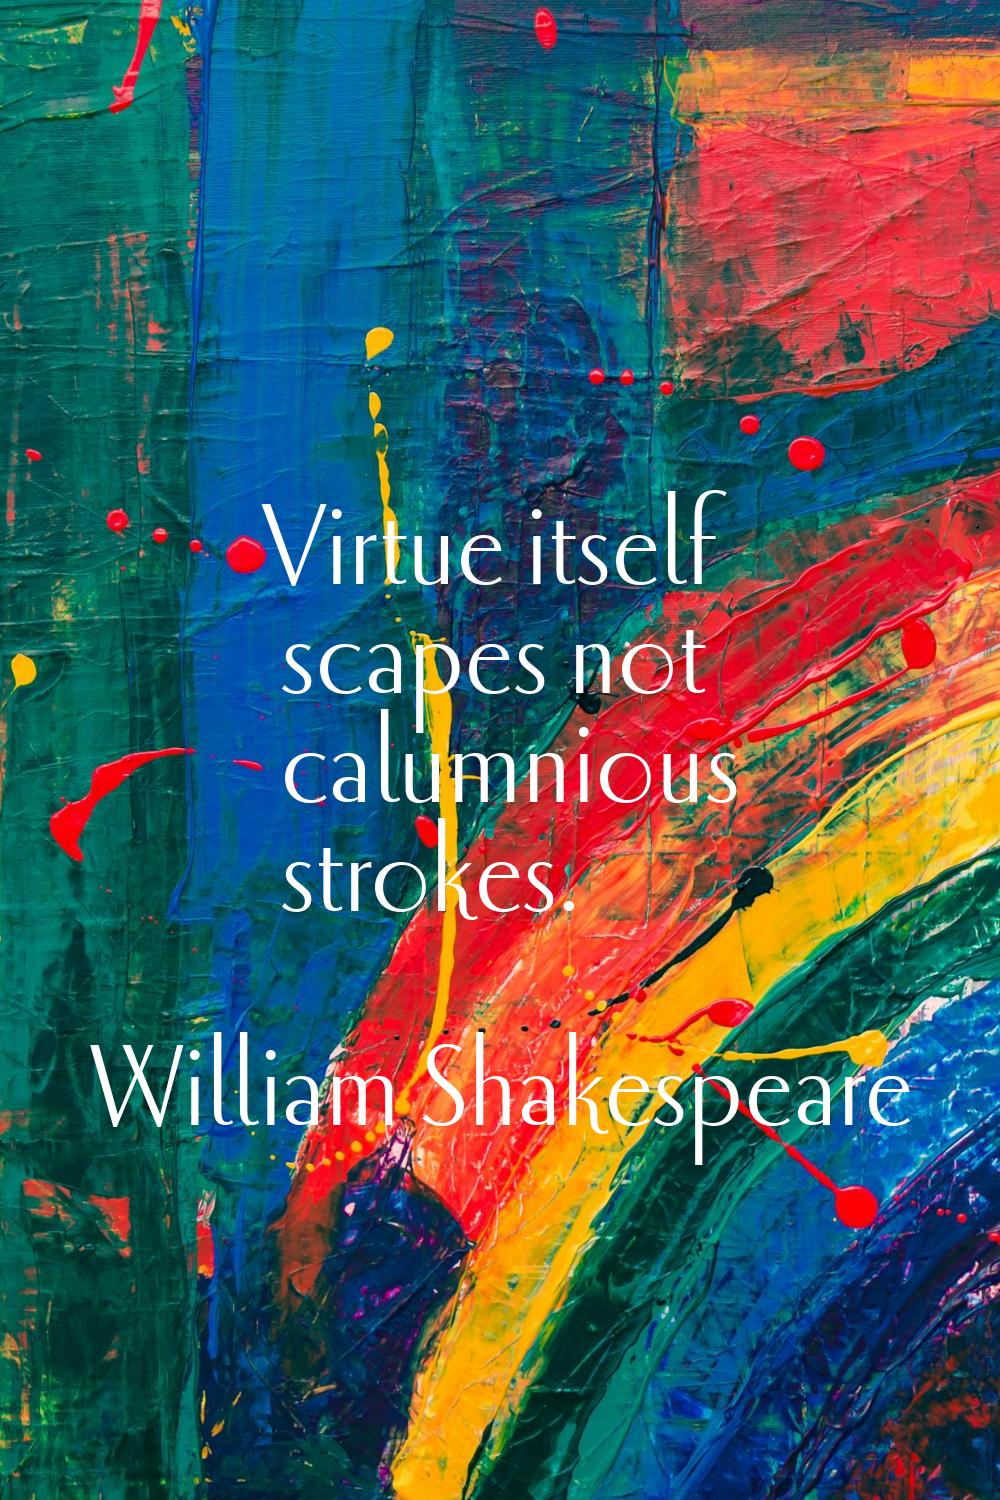 Virtue itself scapes not calumnious strokes.